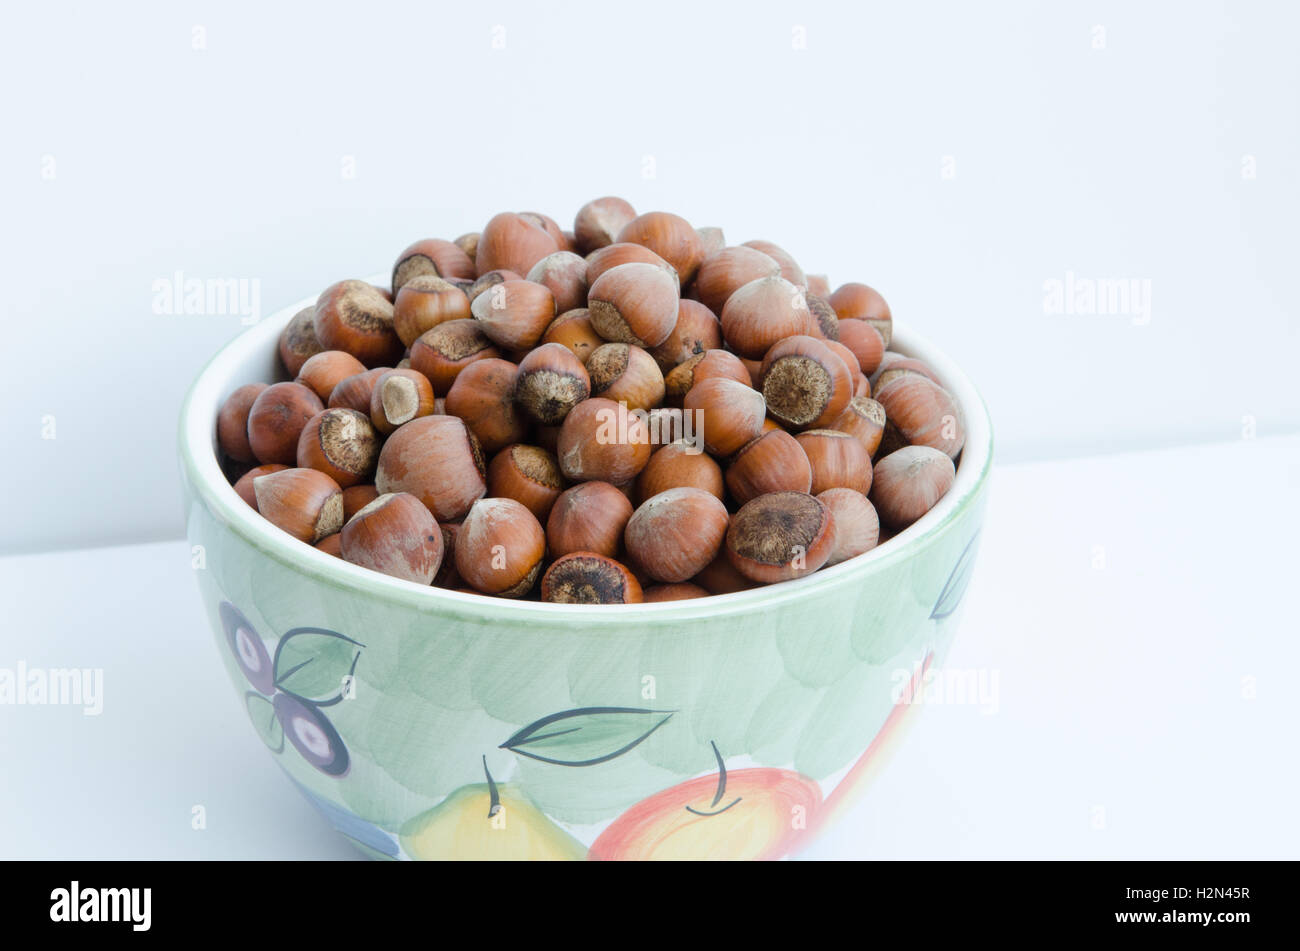 bowl of unshelled hazelnuts against a white background Stock Photo